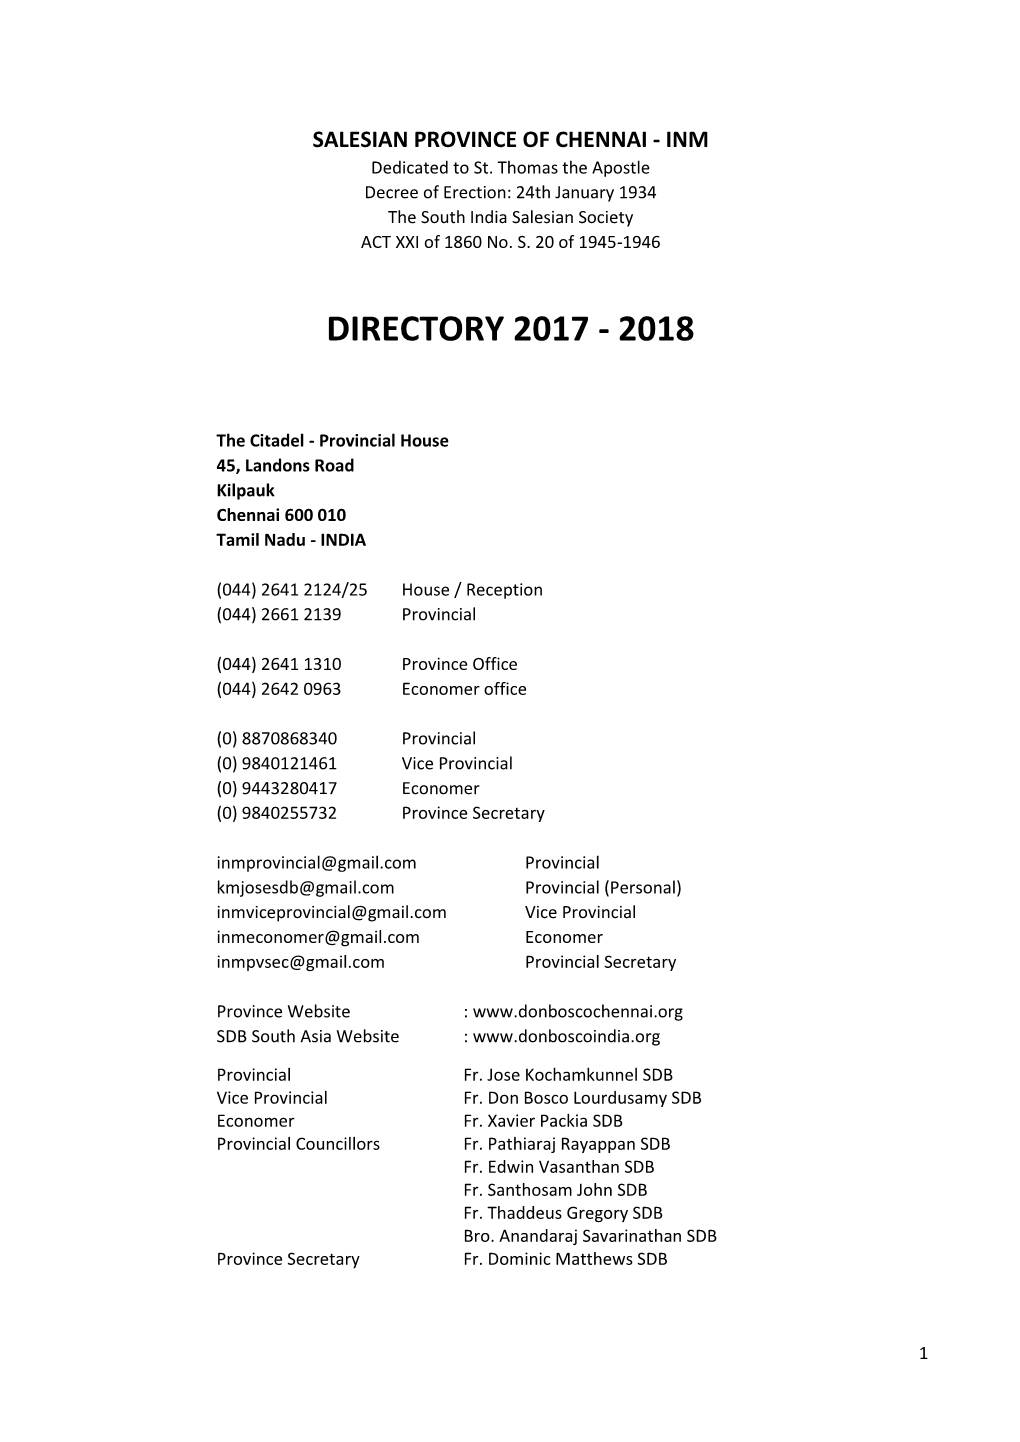 Directory 2017 - 2018